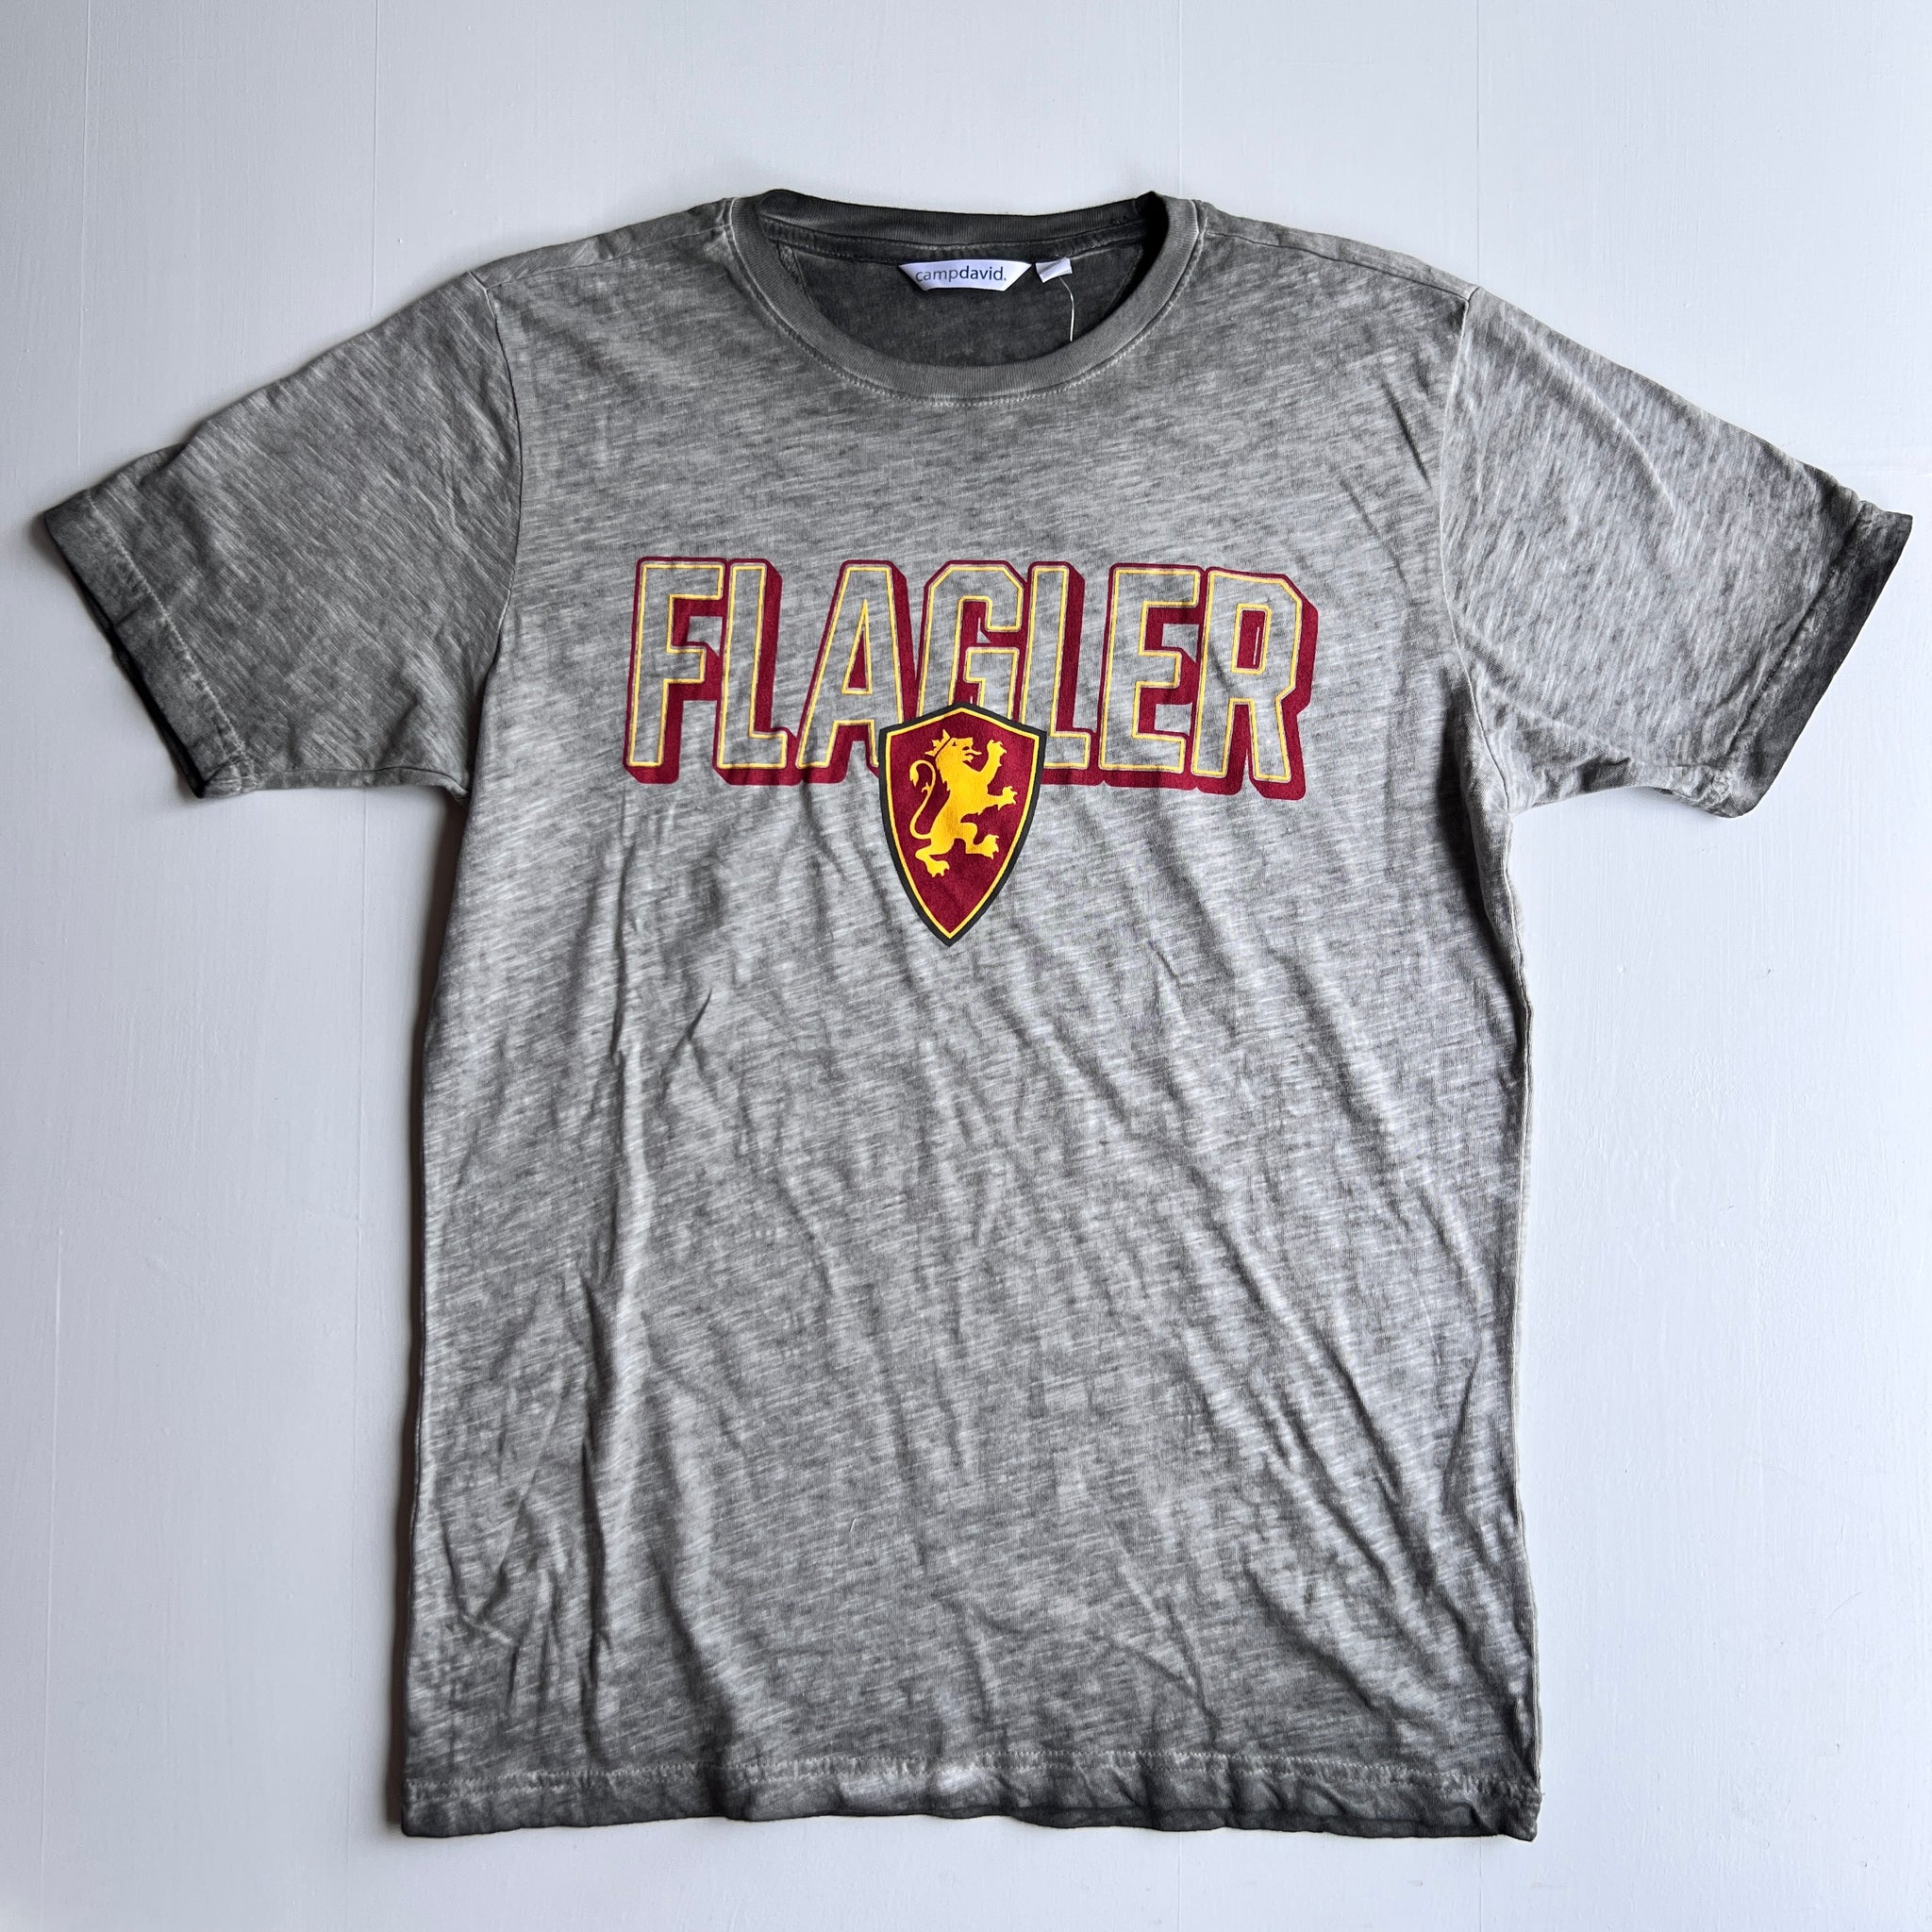 Flagler Shield Craze T-Shirt